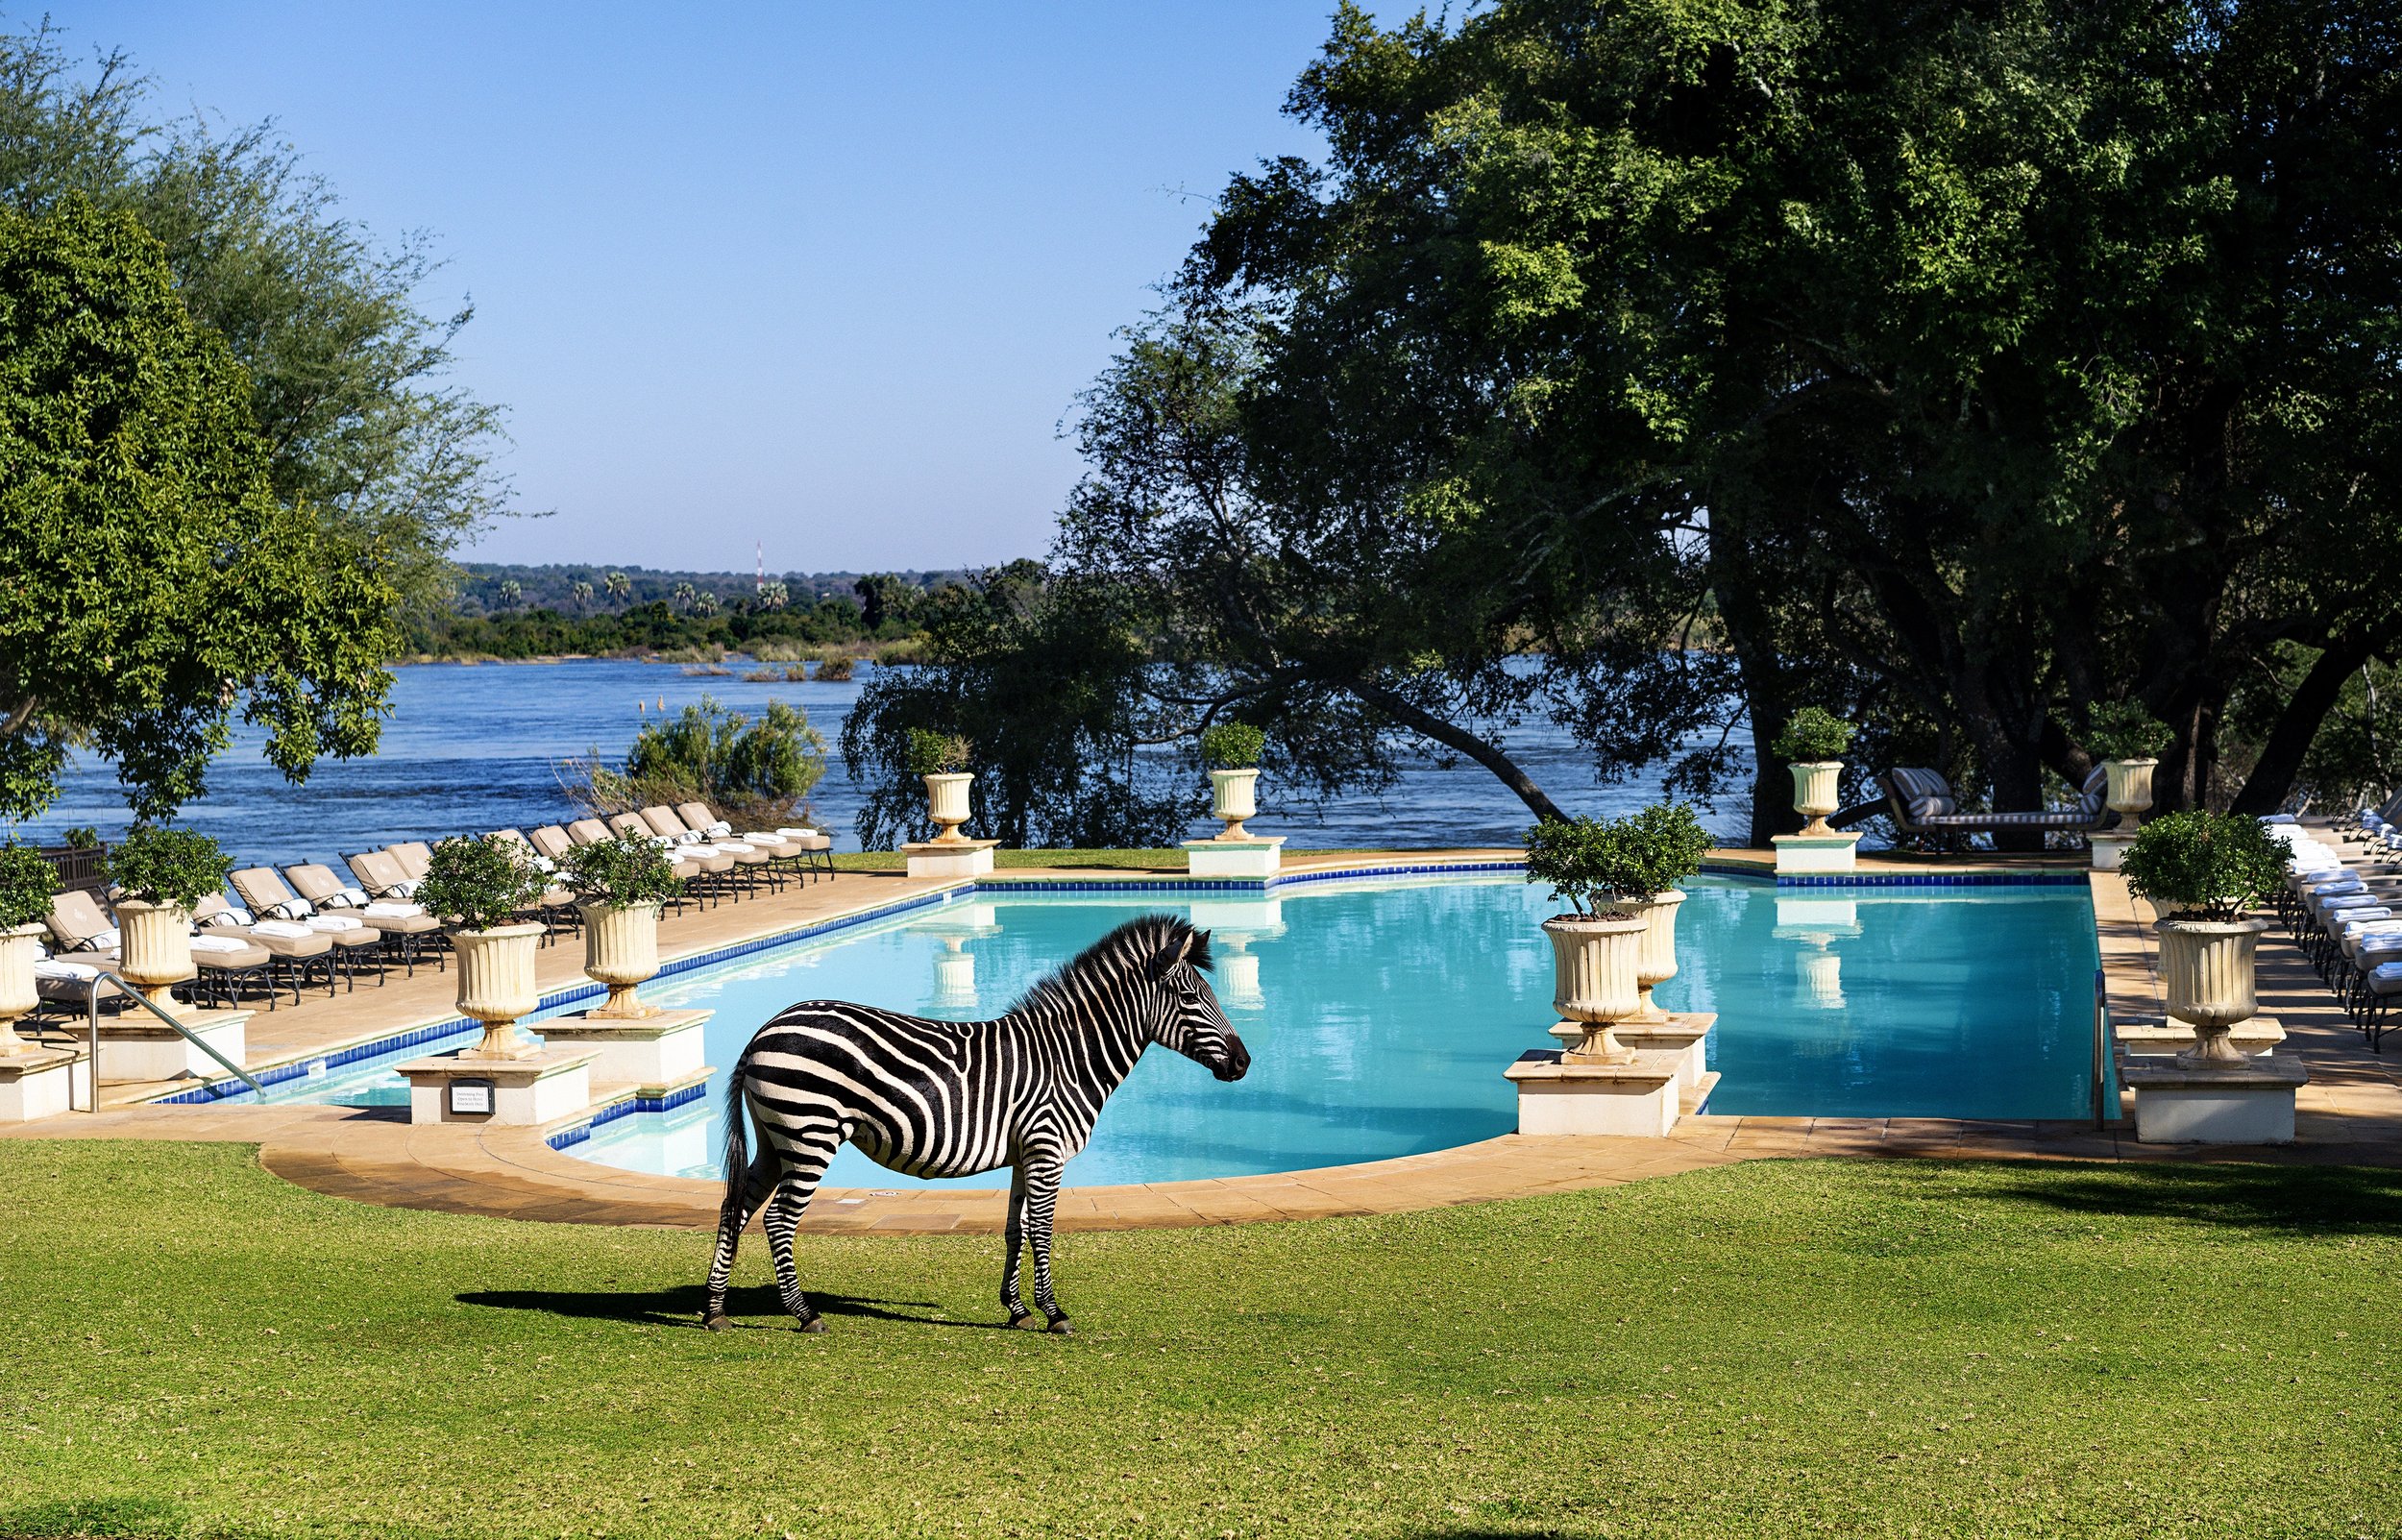 The_Royal_Livingstone_by_Anantara_Pool_view_With_Zebra-3976x2549.jpg